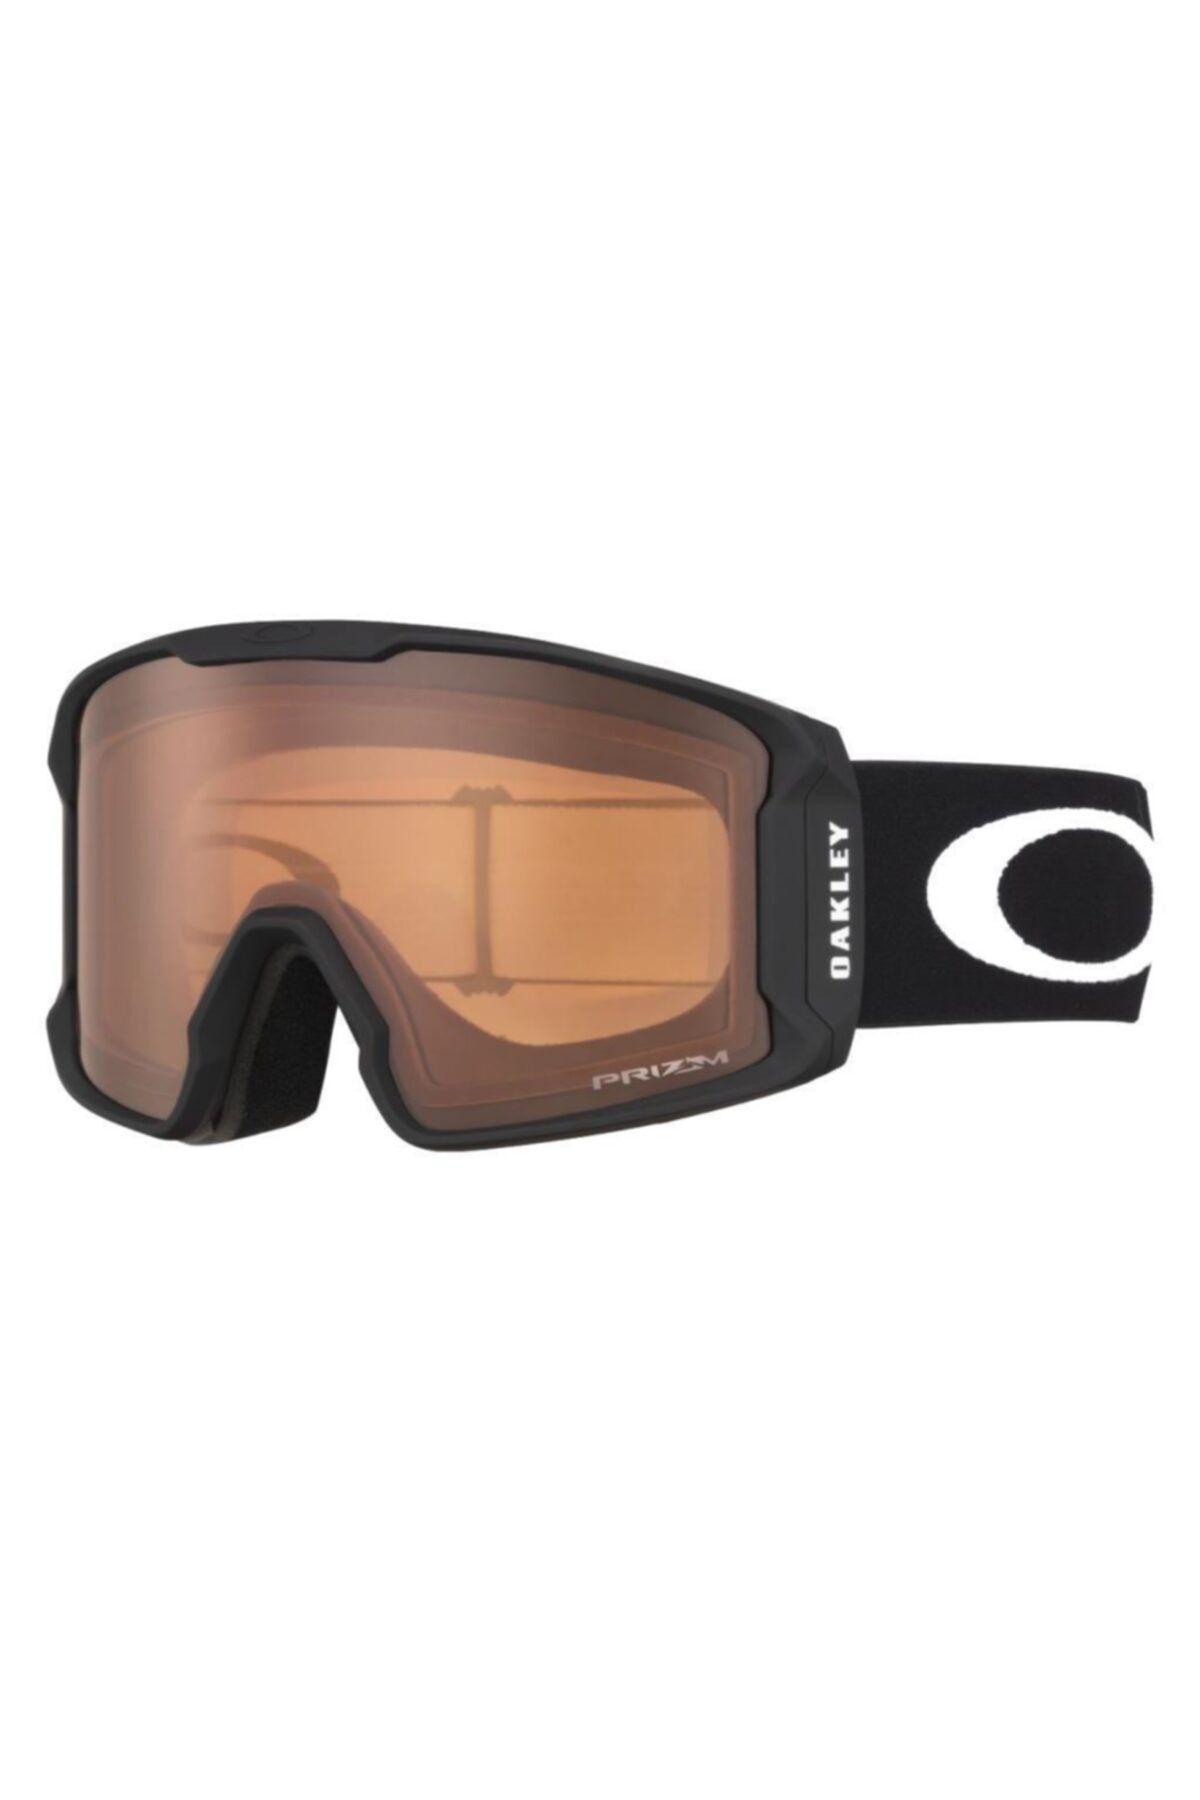 Oakley Oo7070 Lıne Mıner Xl 5701 Prızm Kayak Gözlüğü